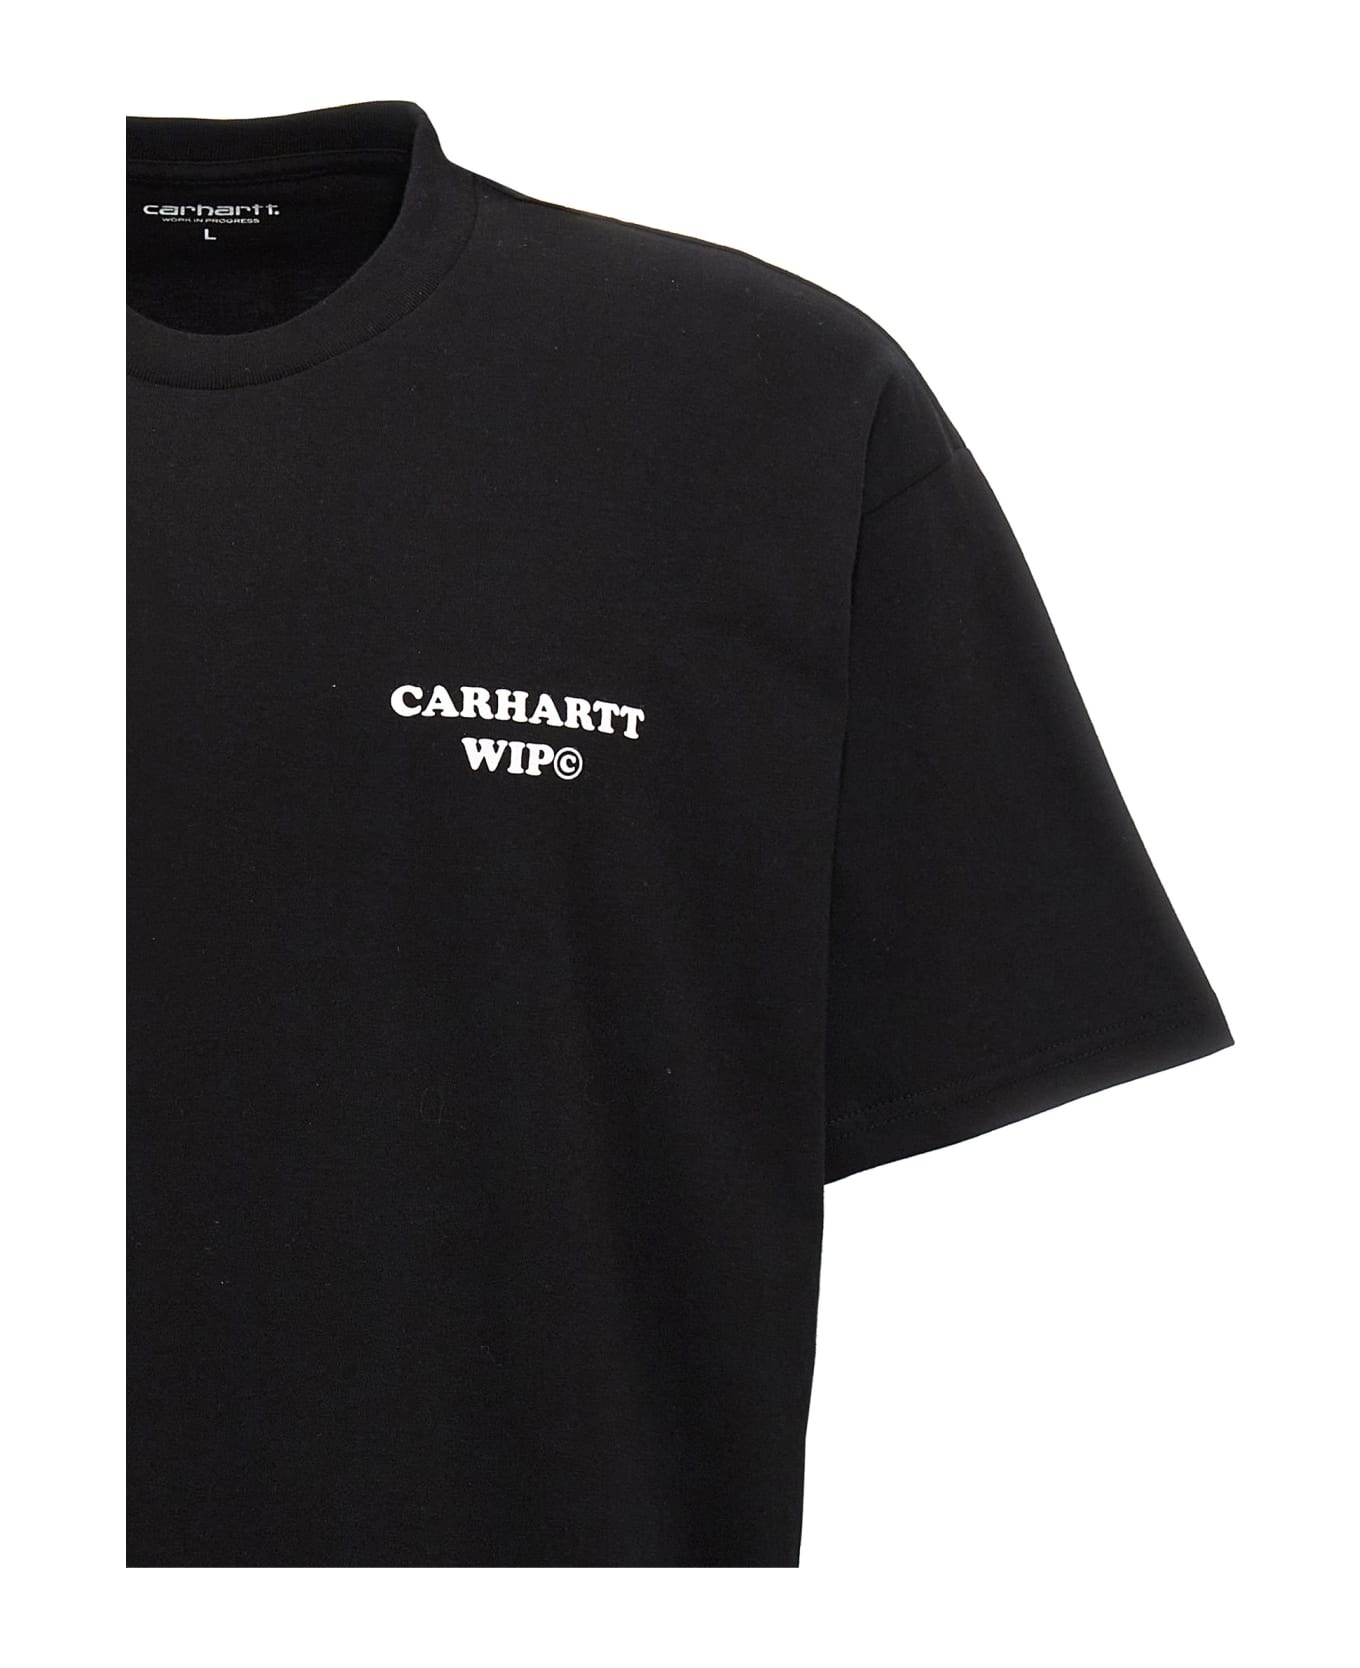 Carhartt 'isis Maria Dinner' T-shirt - Black  